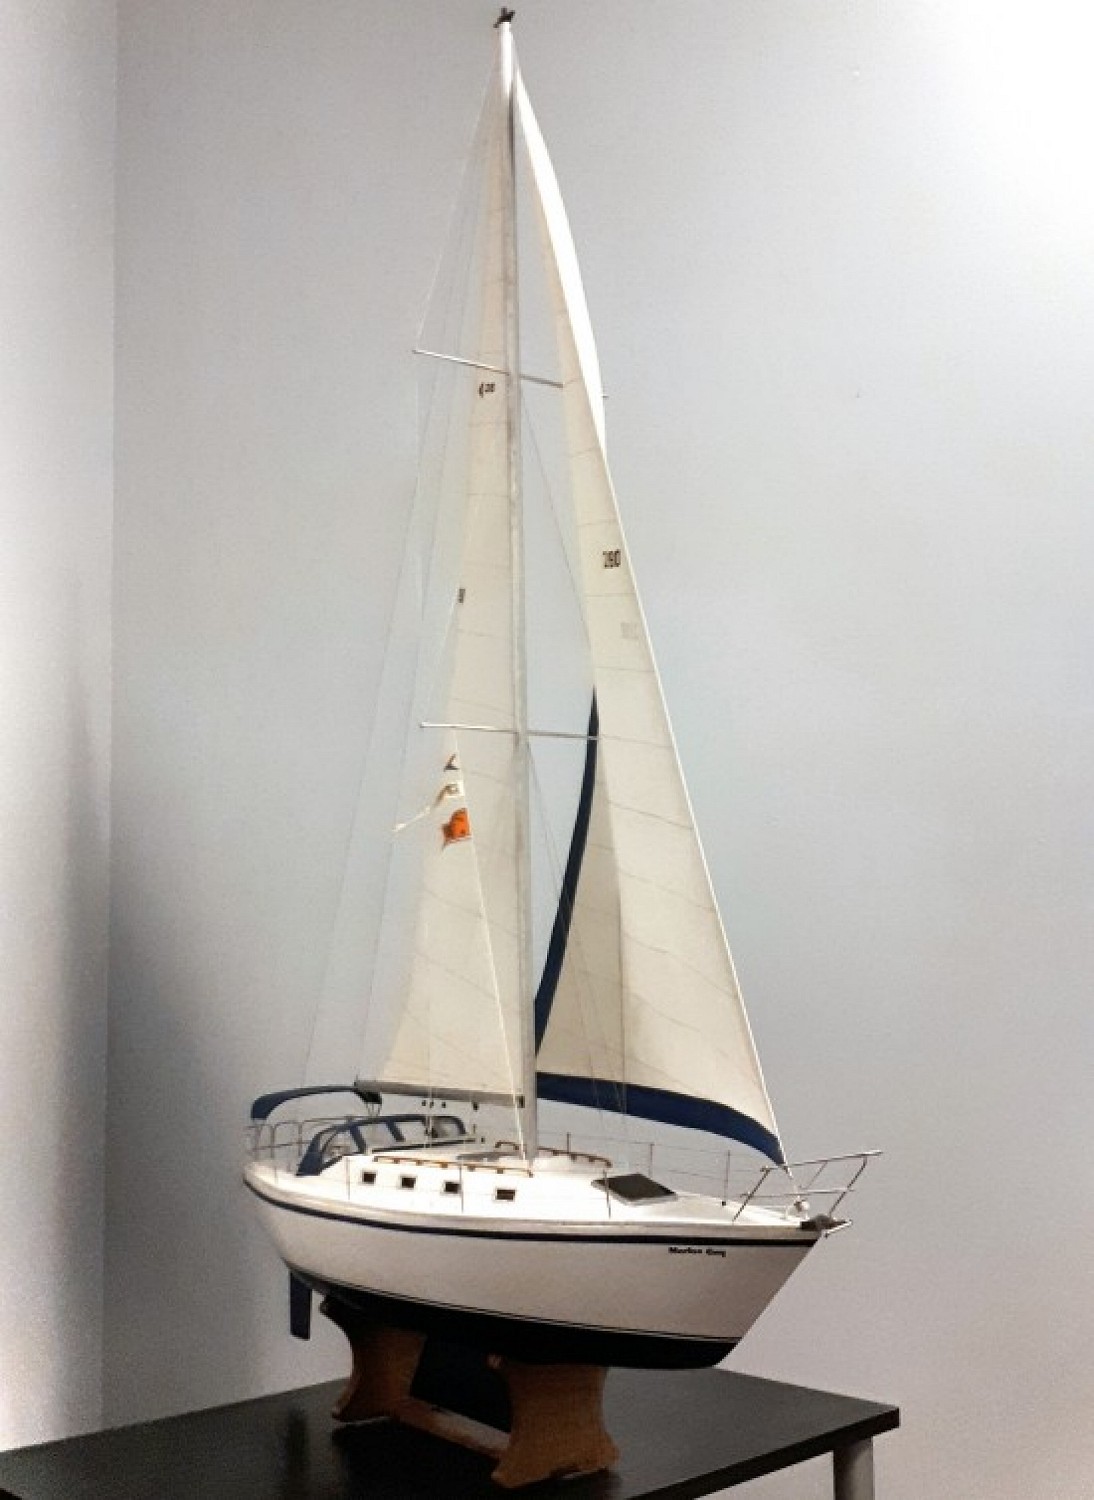 Image of model yacht - full sail